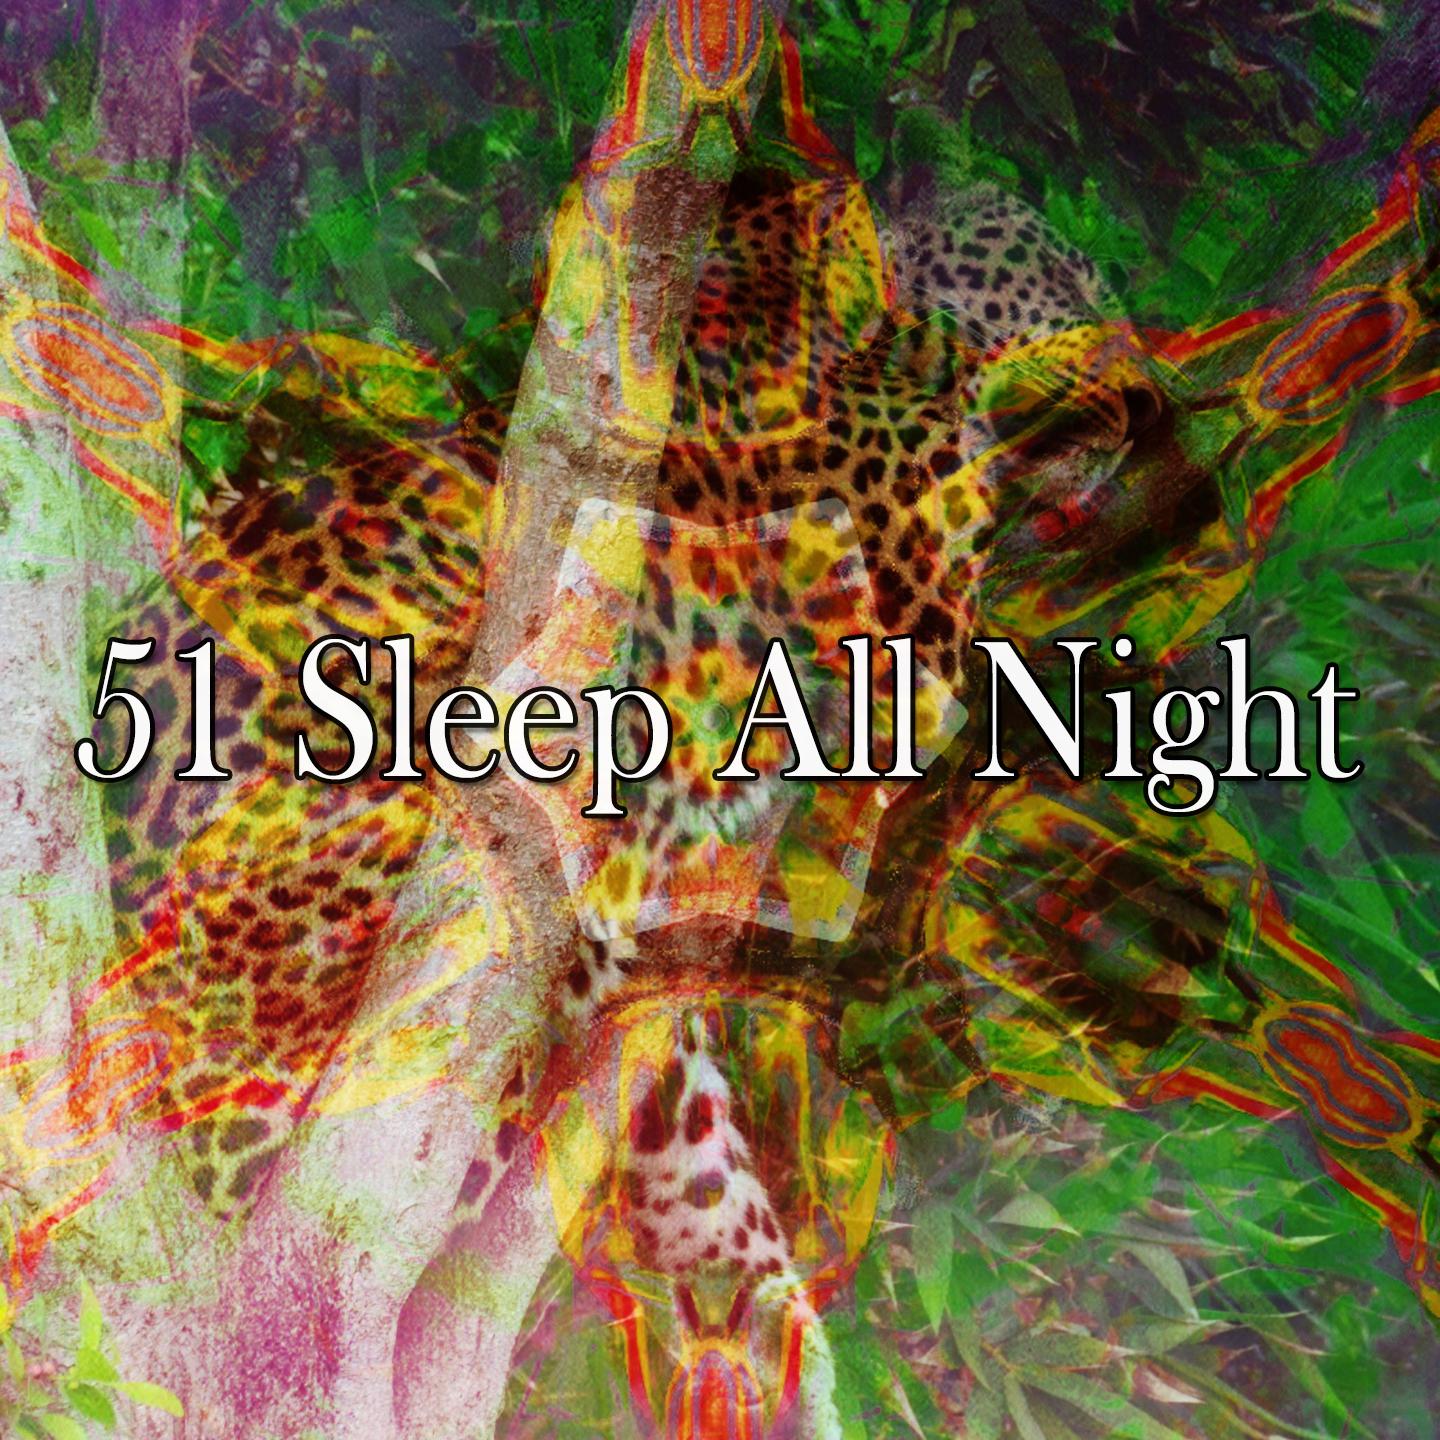 51 Sleep All Night